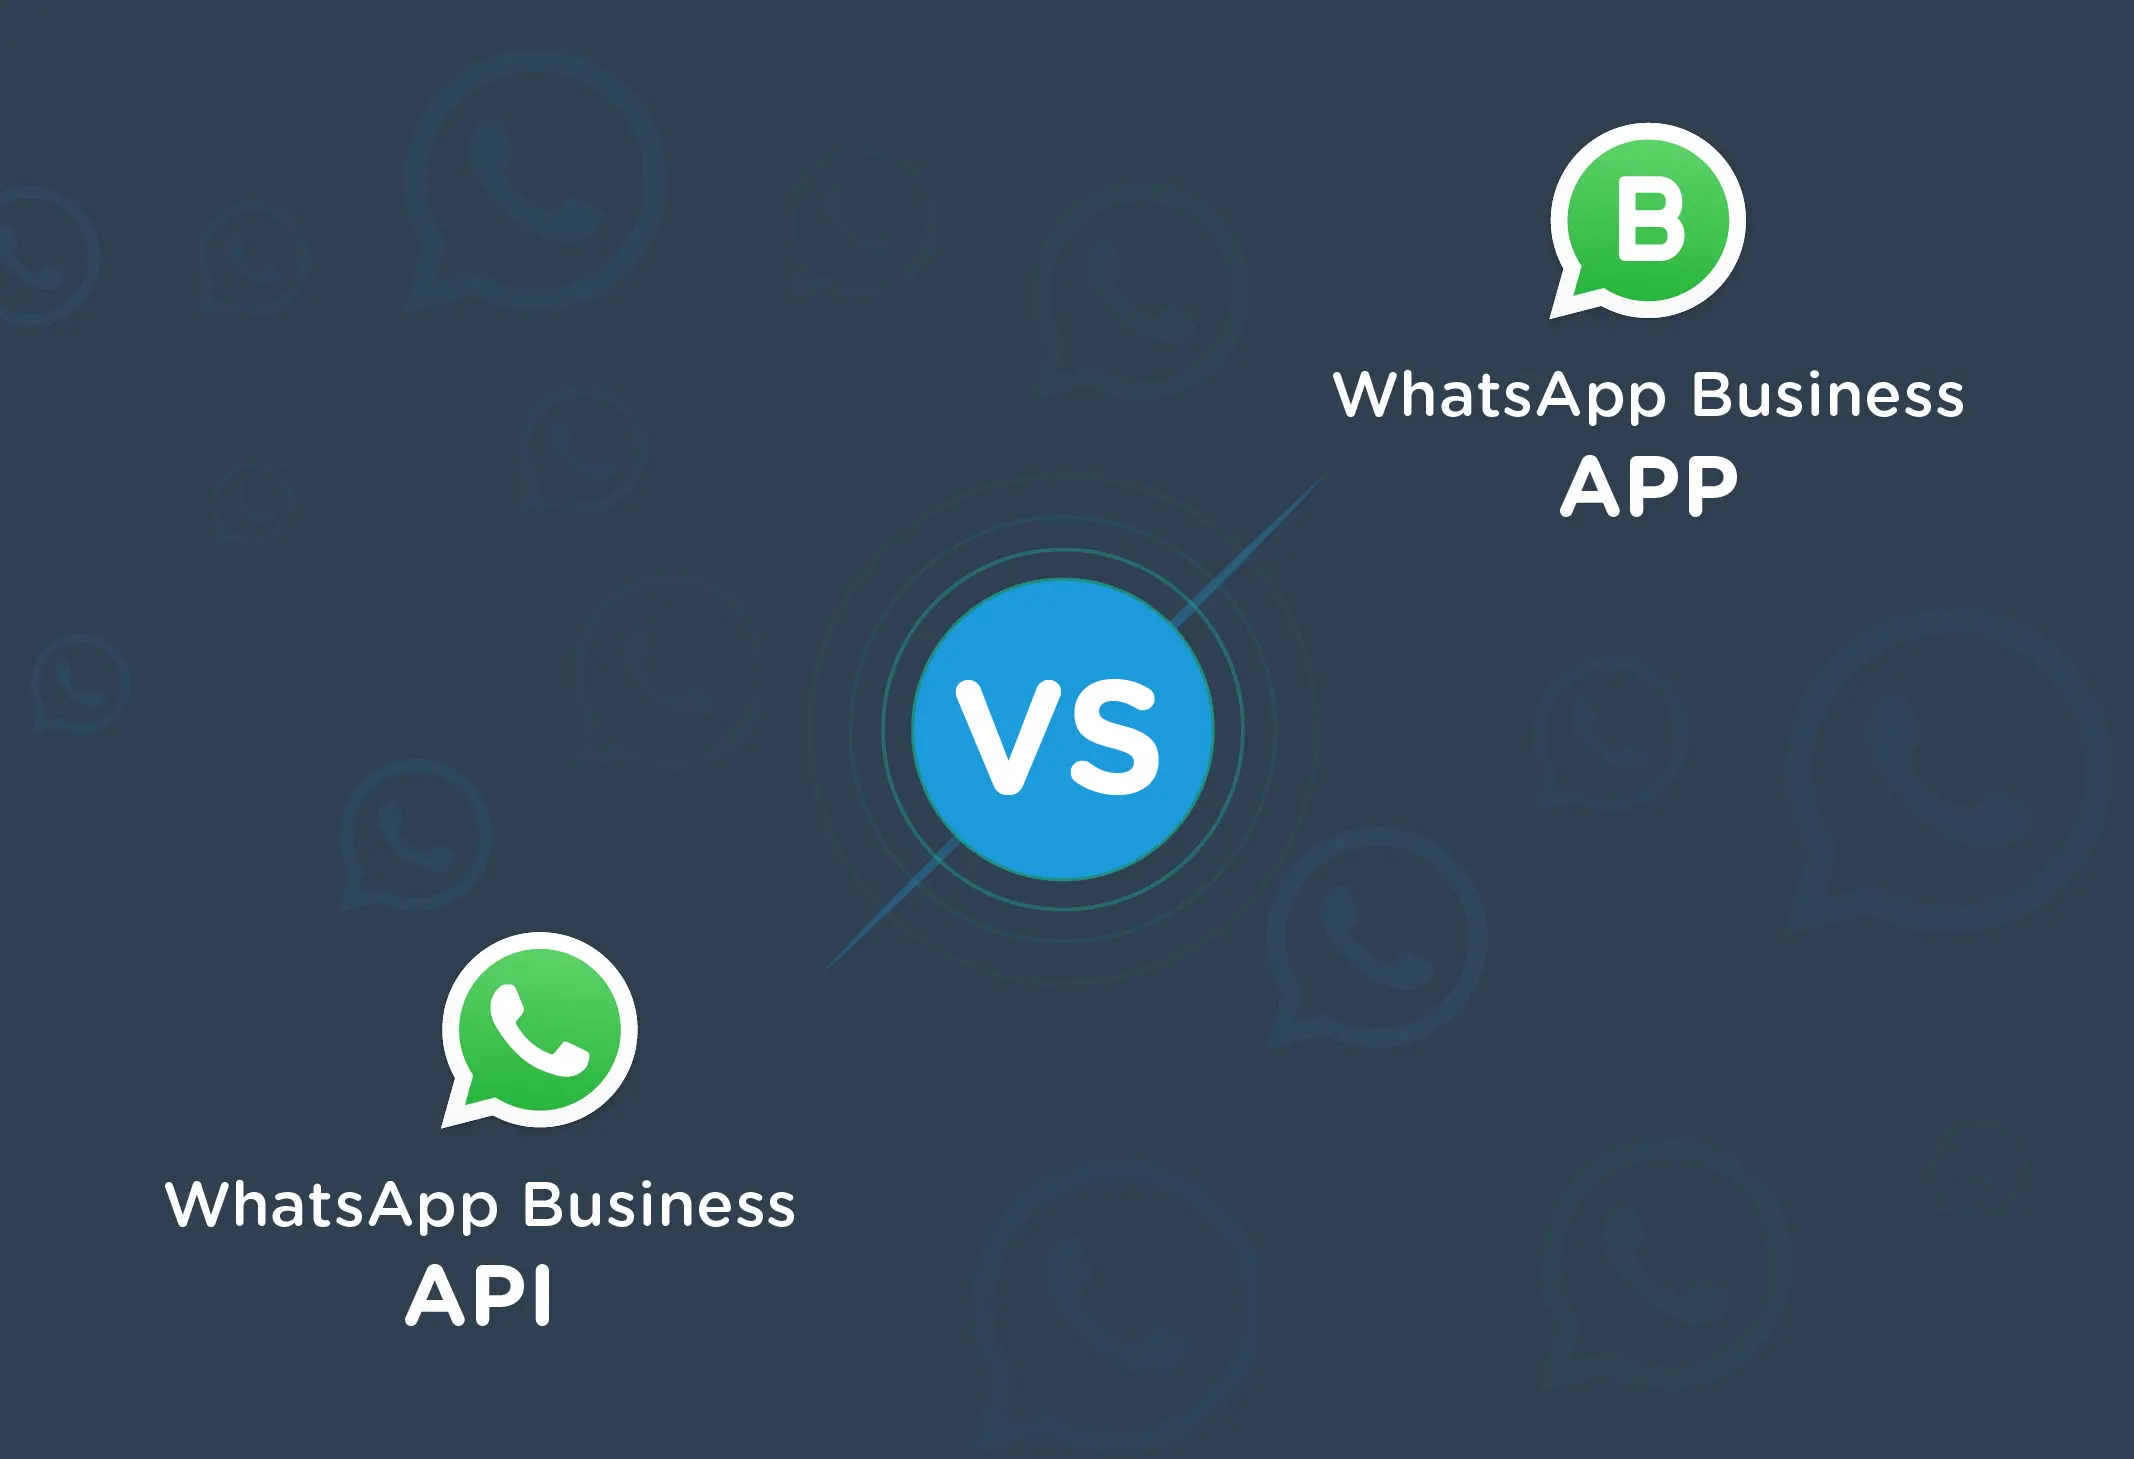 Business Customer Service: WhatsApp Business API vs. WhatsApp Business APP